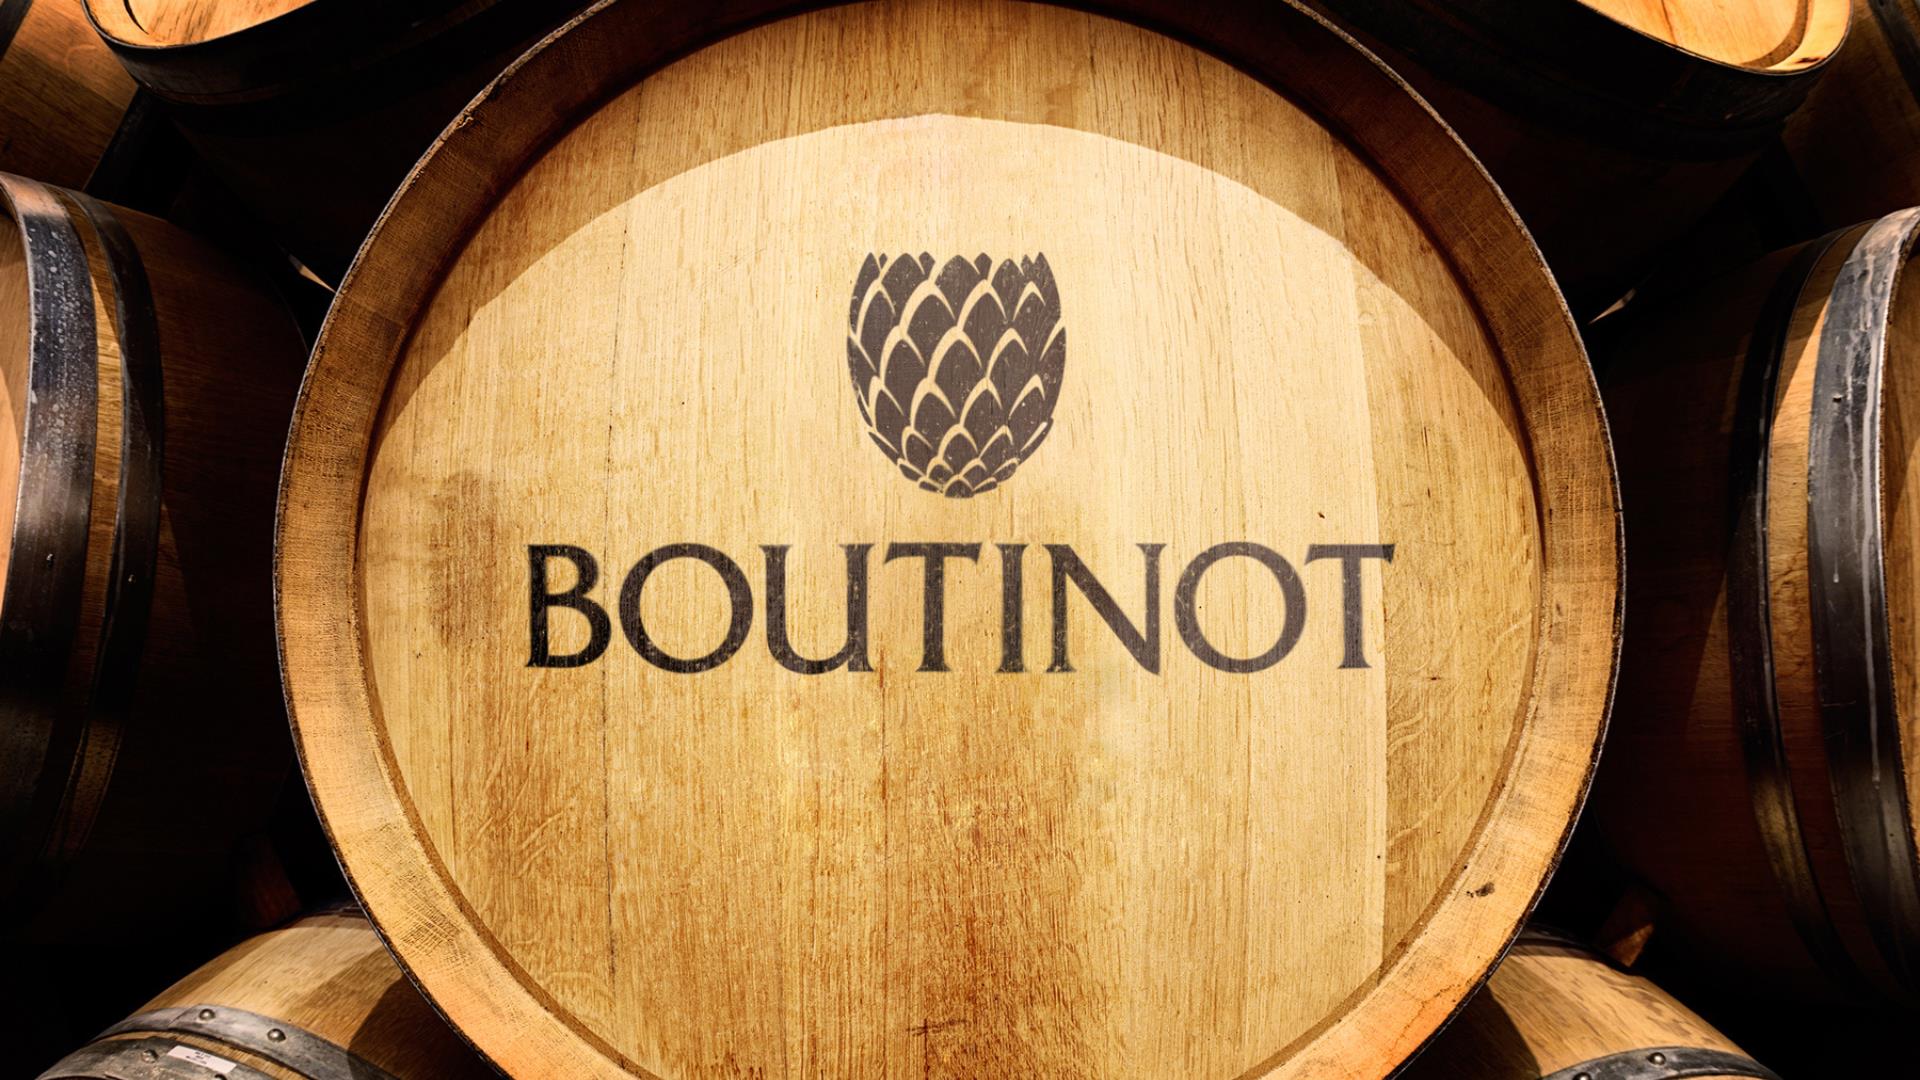 Wine barrel with Boutinot logo